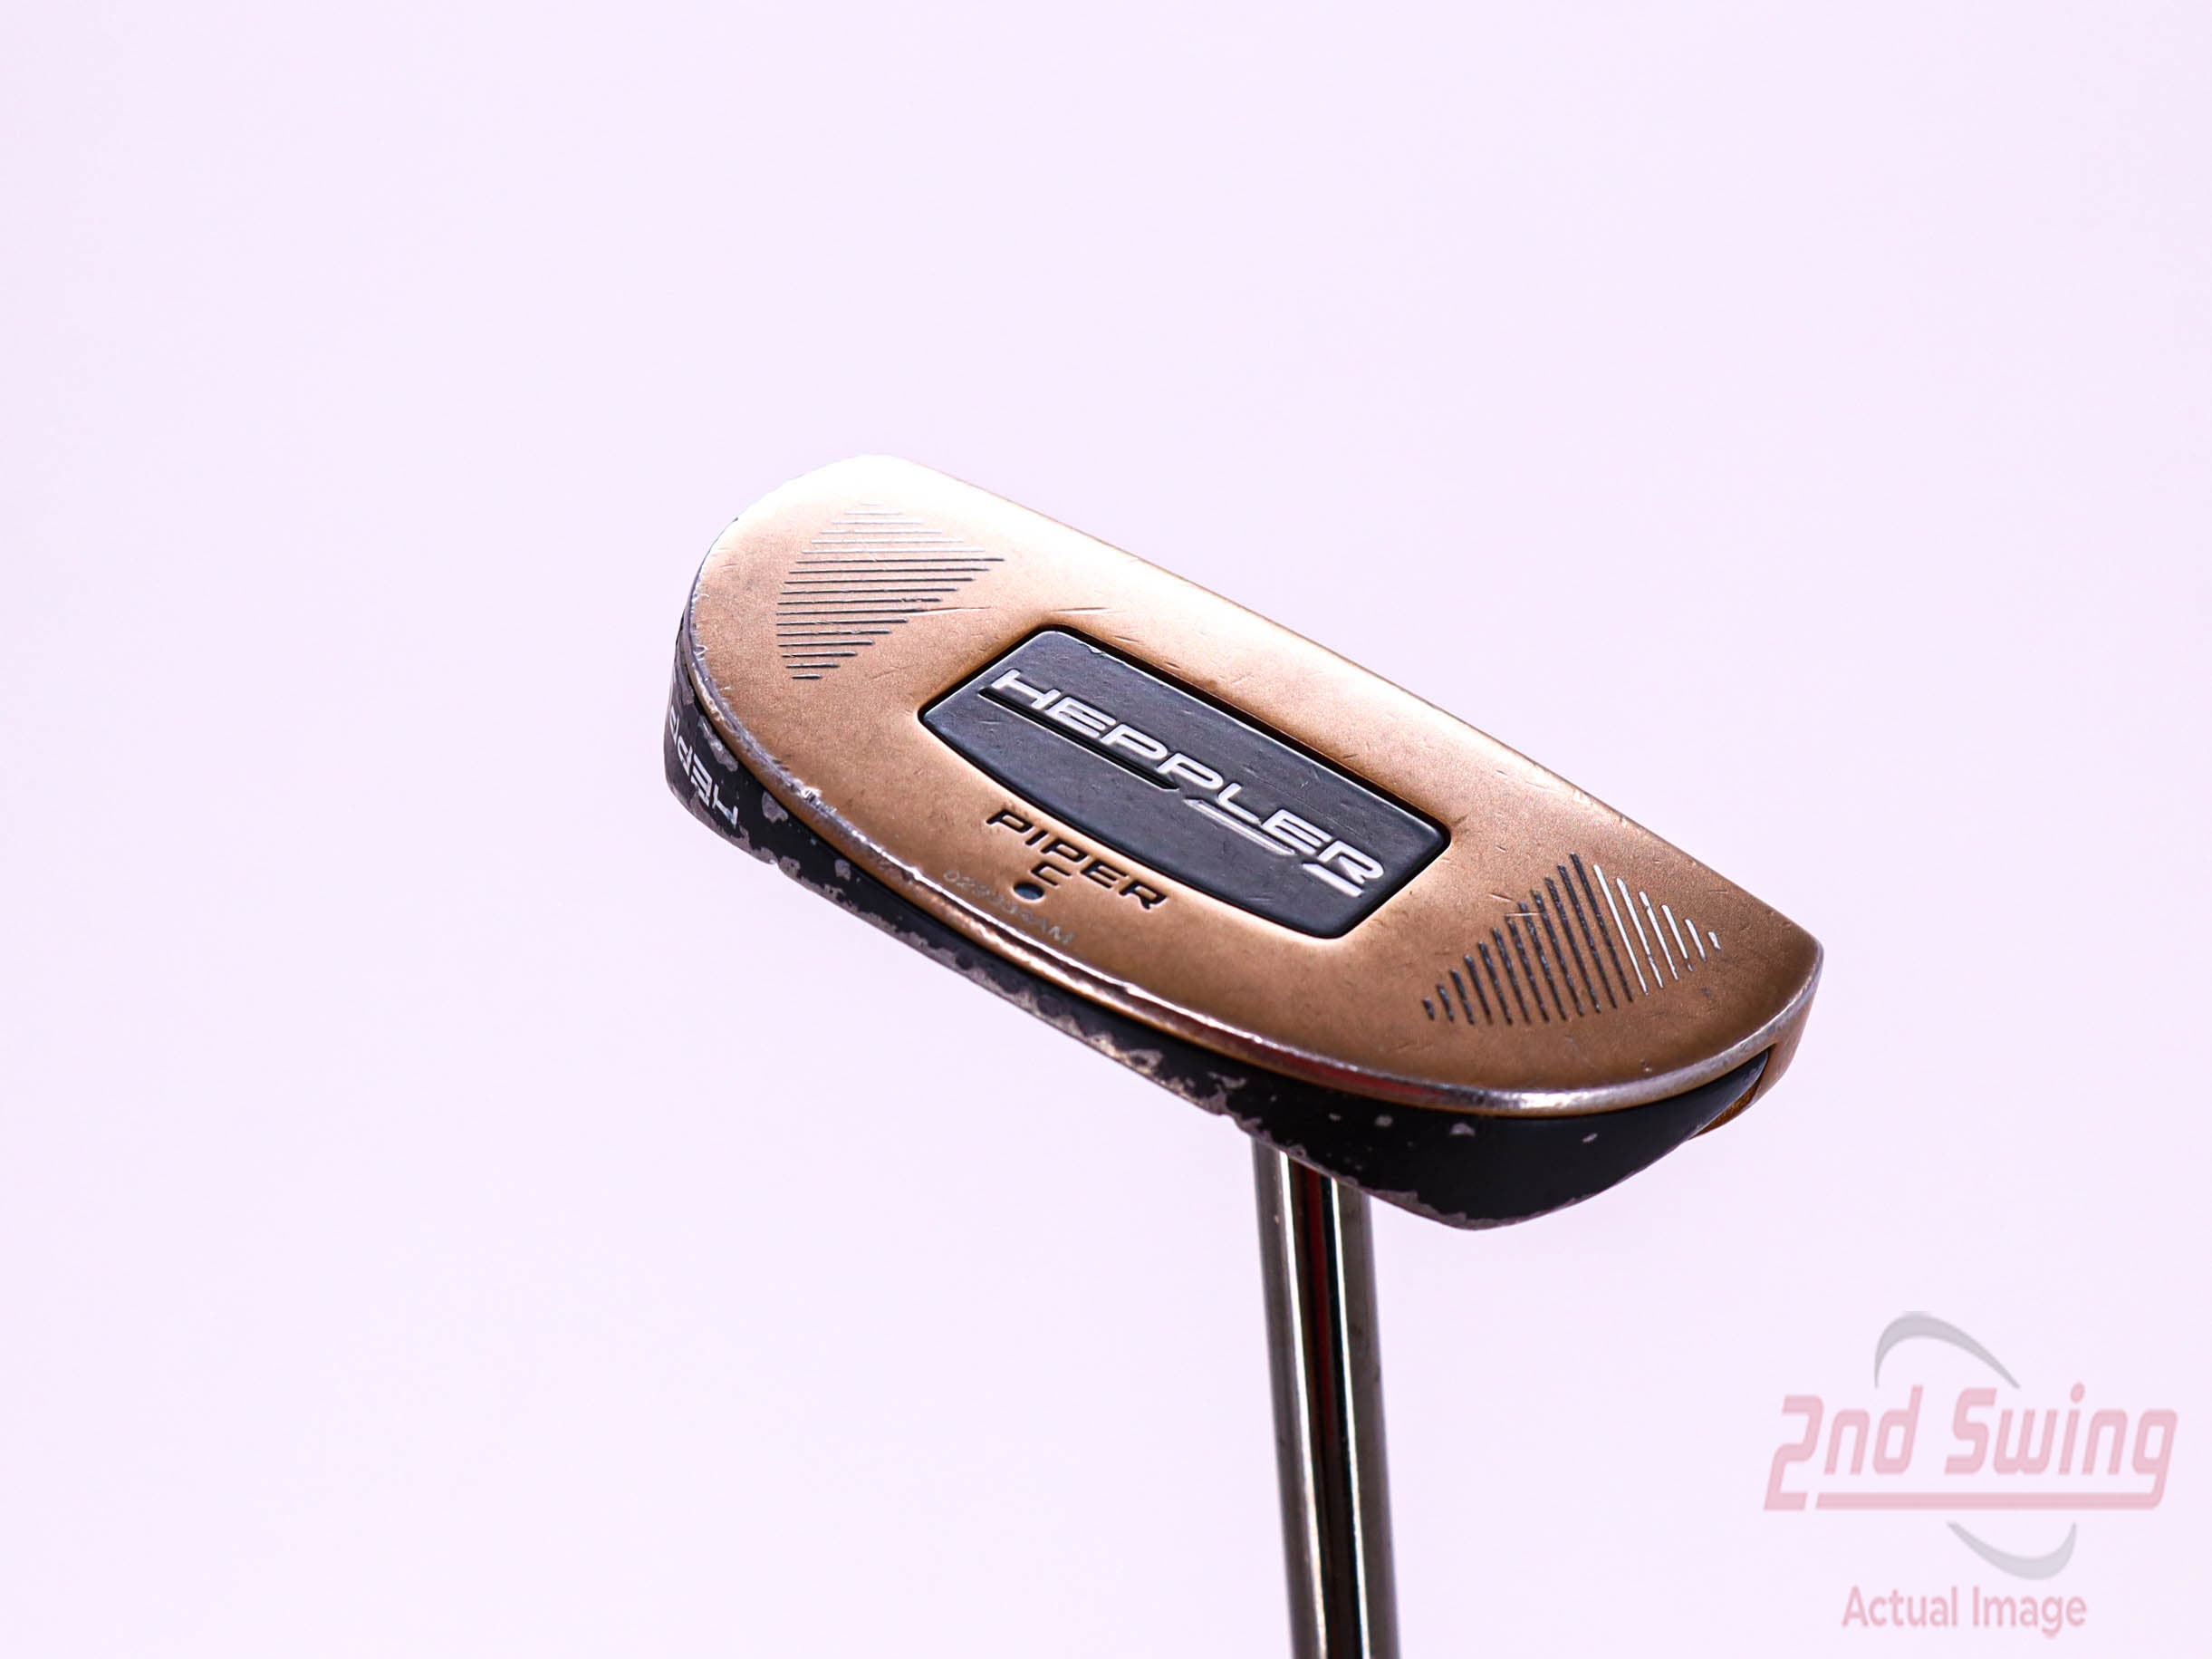 Ping Heppler Piper C Putter | 2nd Swing Golf